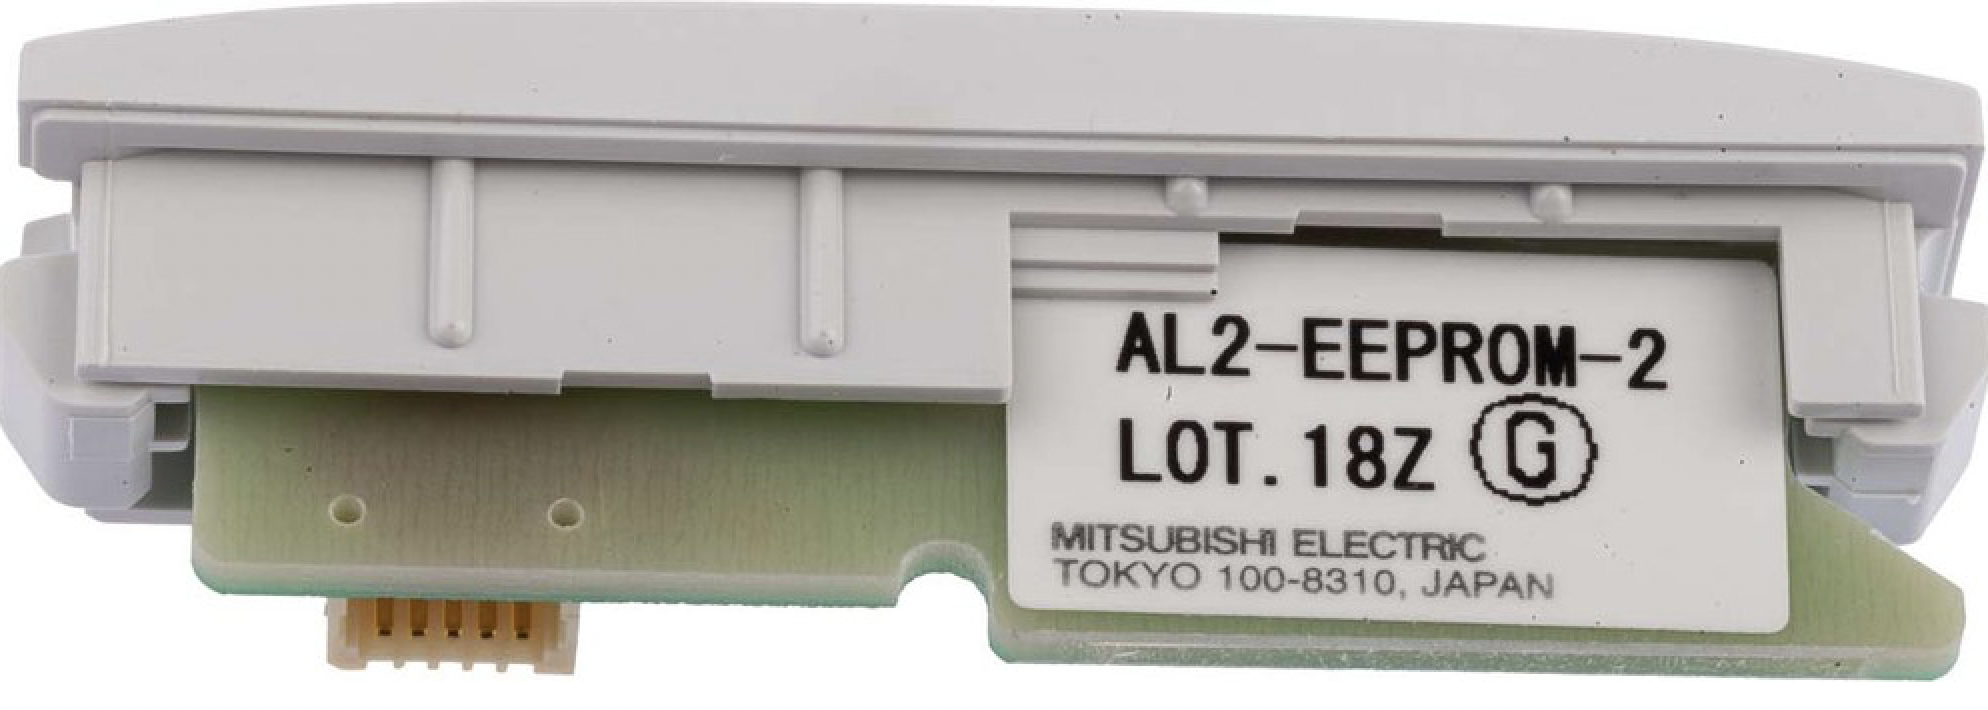 Кассета памяти EEPROM для контроллера Alpha XL, Mitsubishi Electric Карта AL2-EEPROM-2